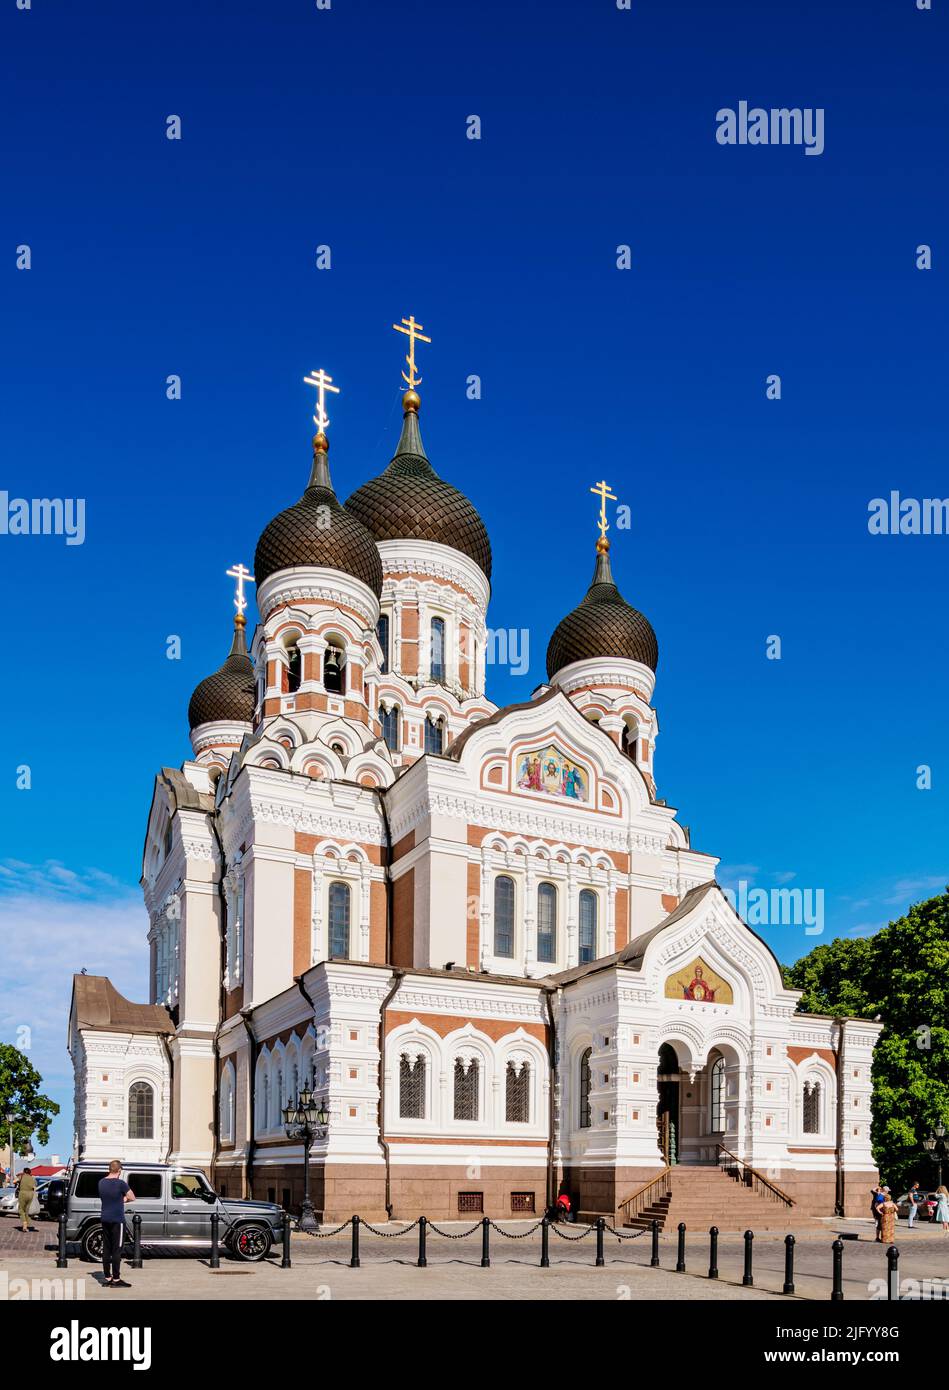 Alexander Nevsky Cathedral, Old Town, UNESCO World Heritage Site, Tallinn, Estonia, Europe Stock Photo